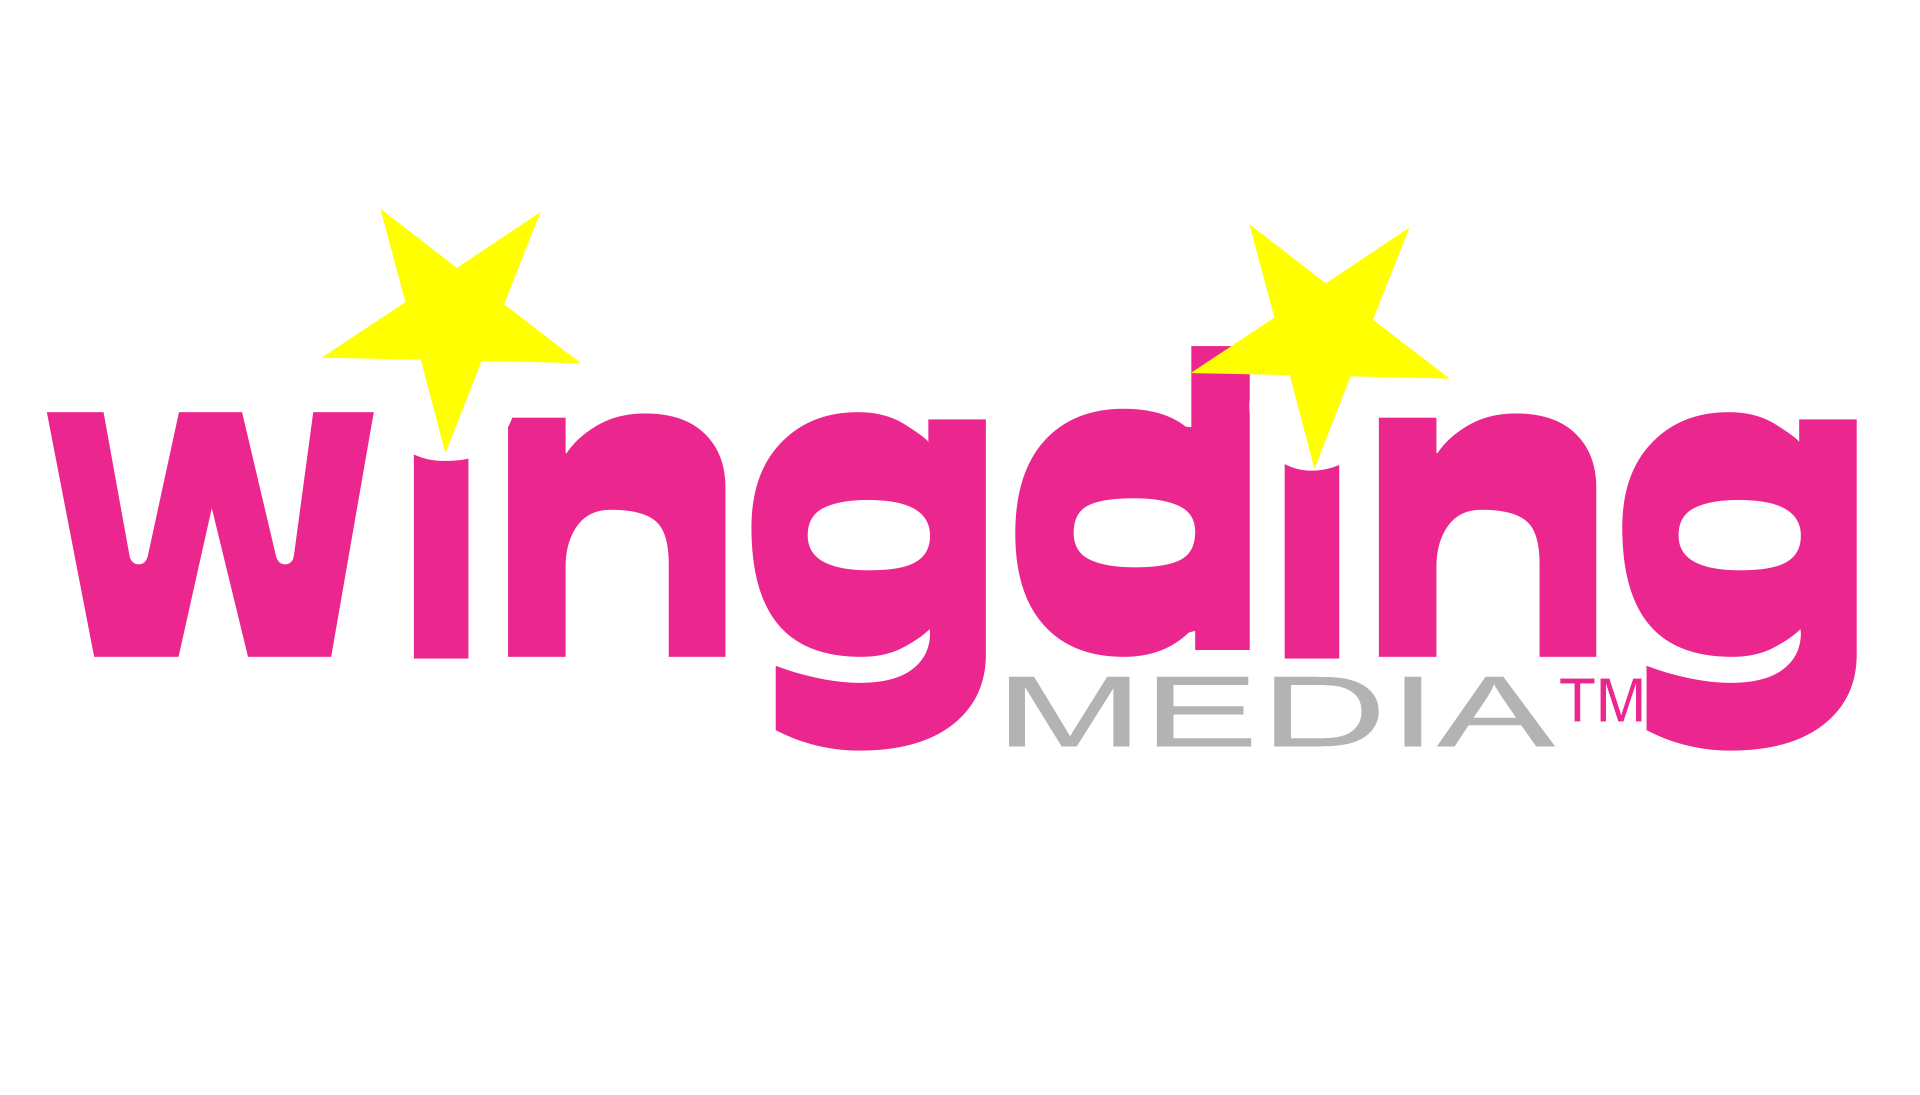 WingDing Media™